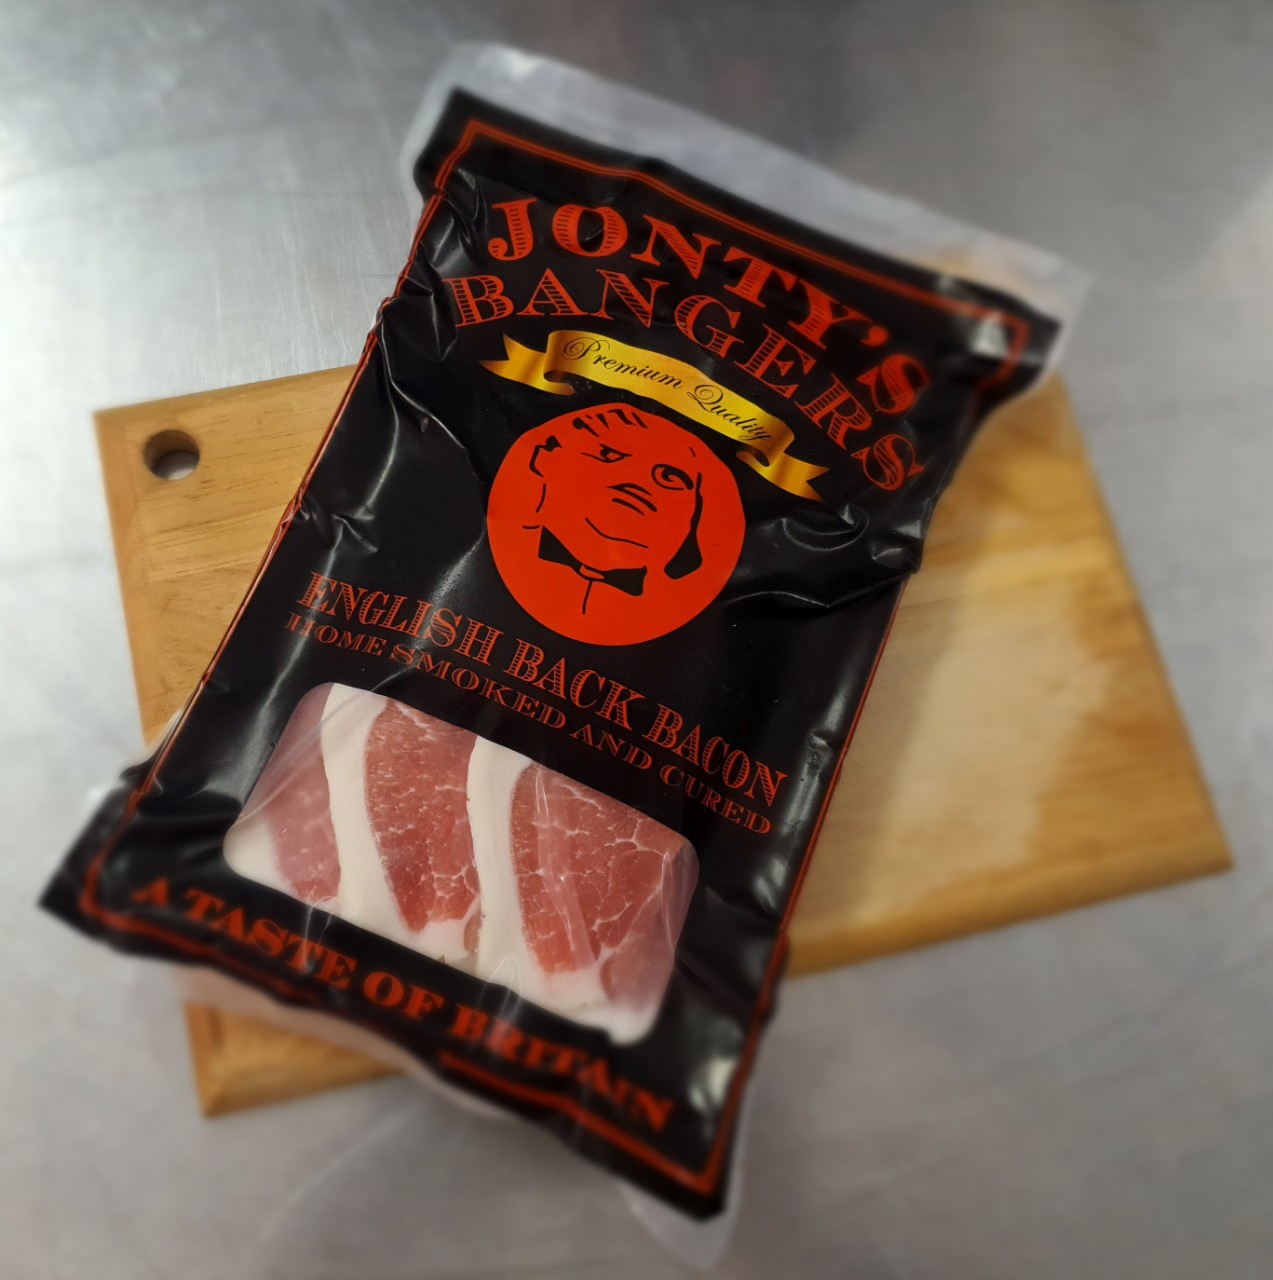 Jonty English Back Bacon Sausage, 500g